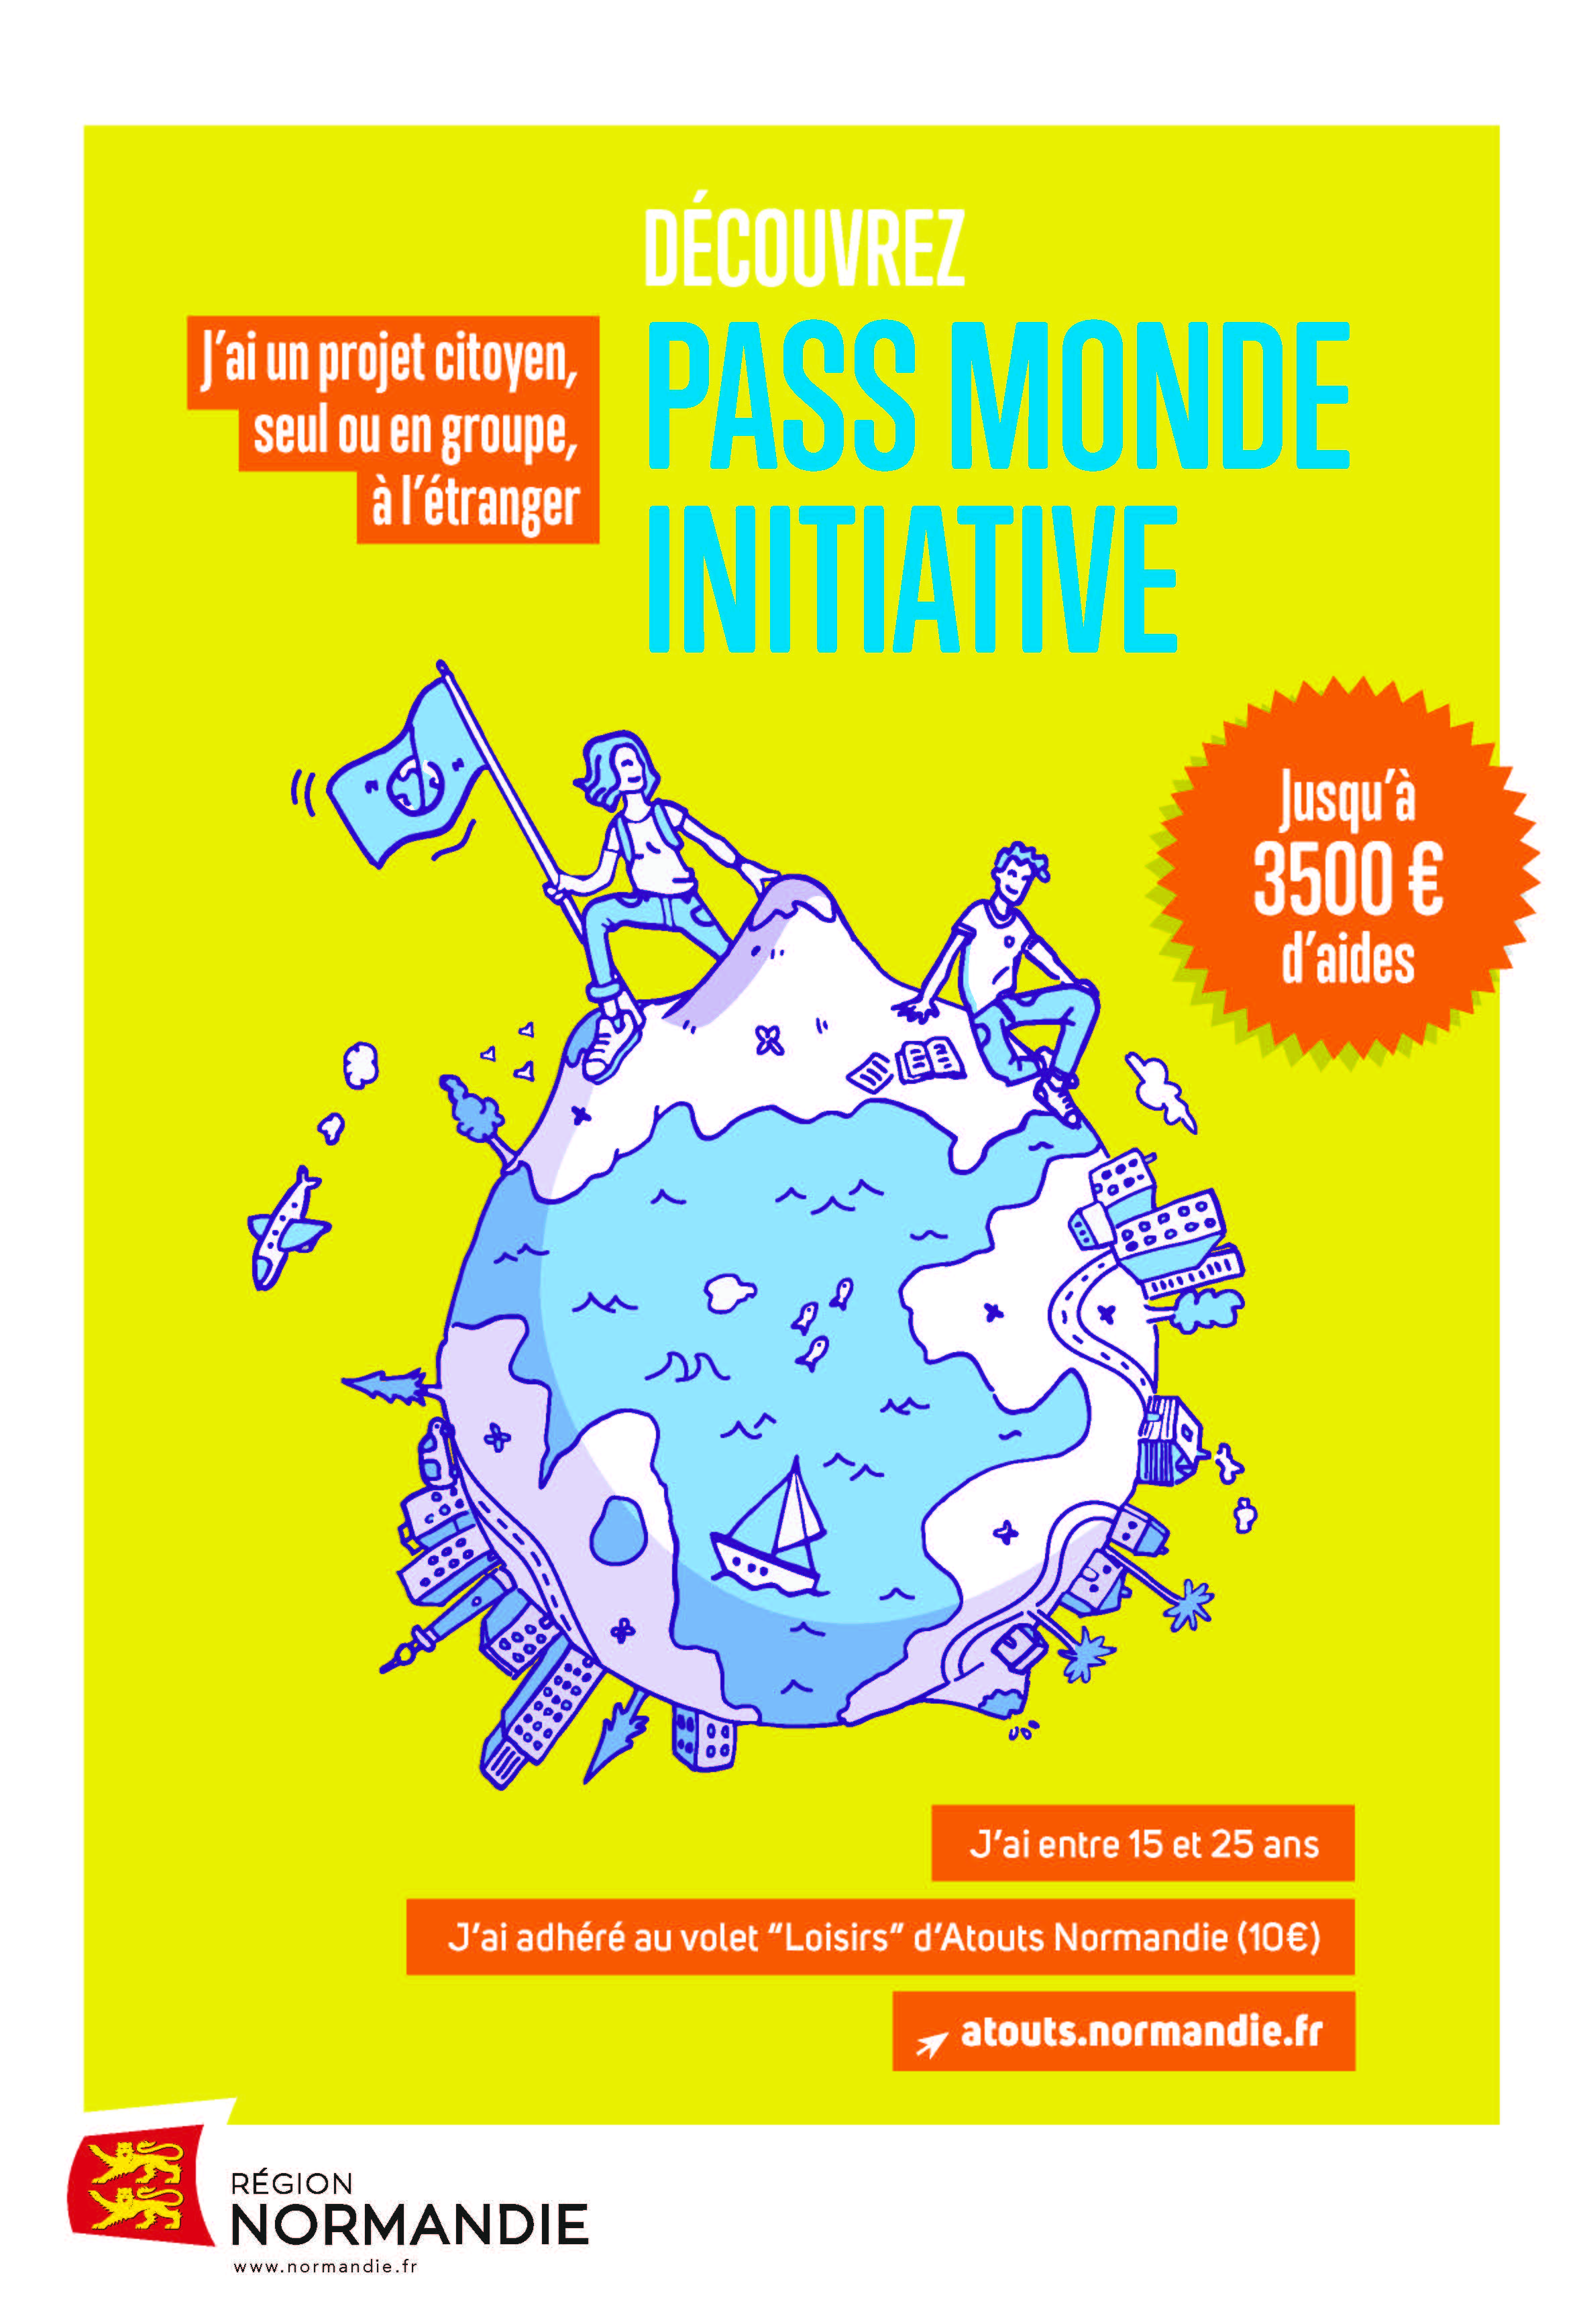 PASS MONDE Initiative